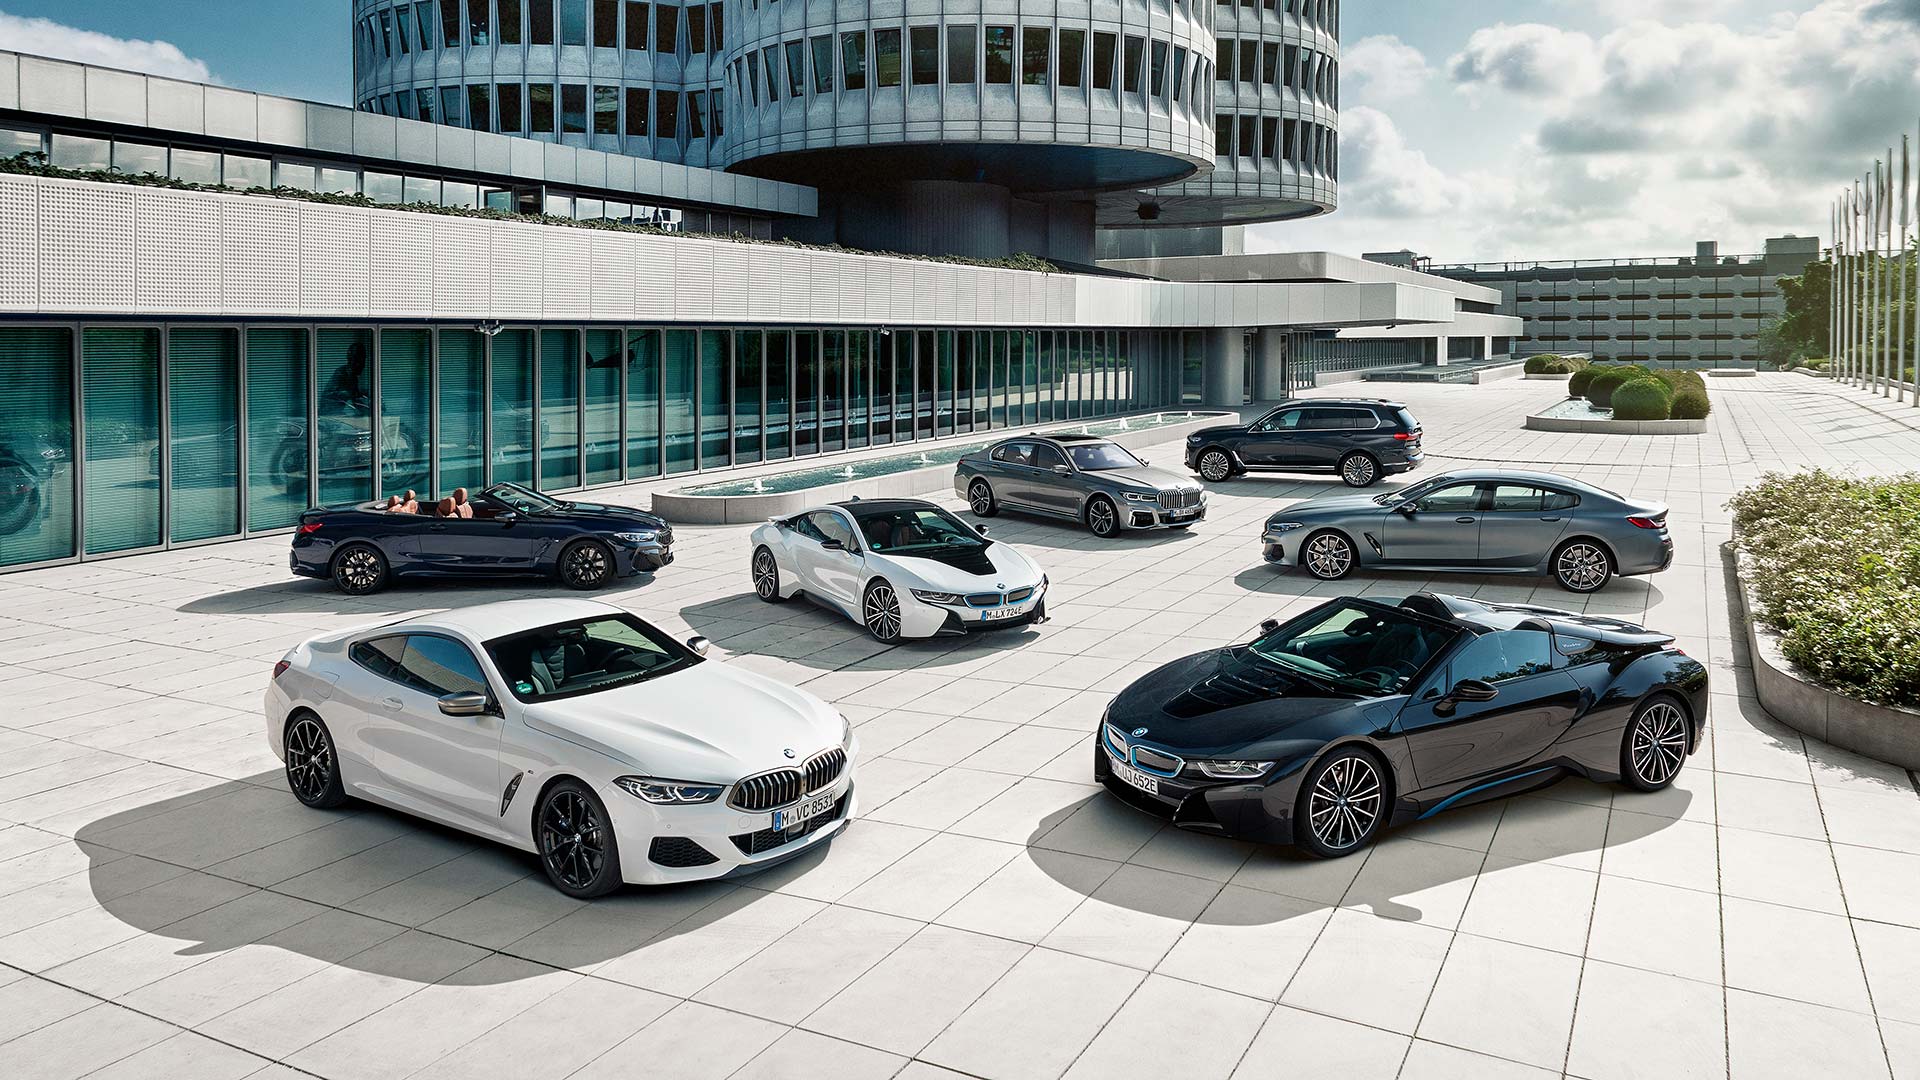 BMW is 2019 best-selling global premium brand